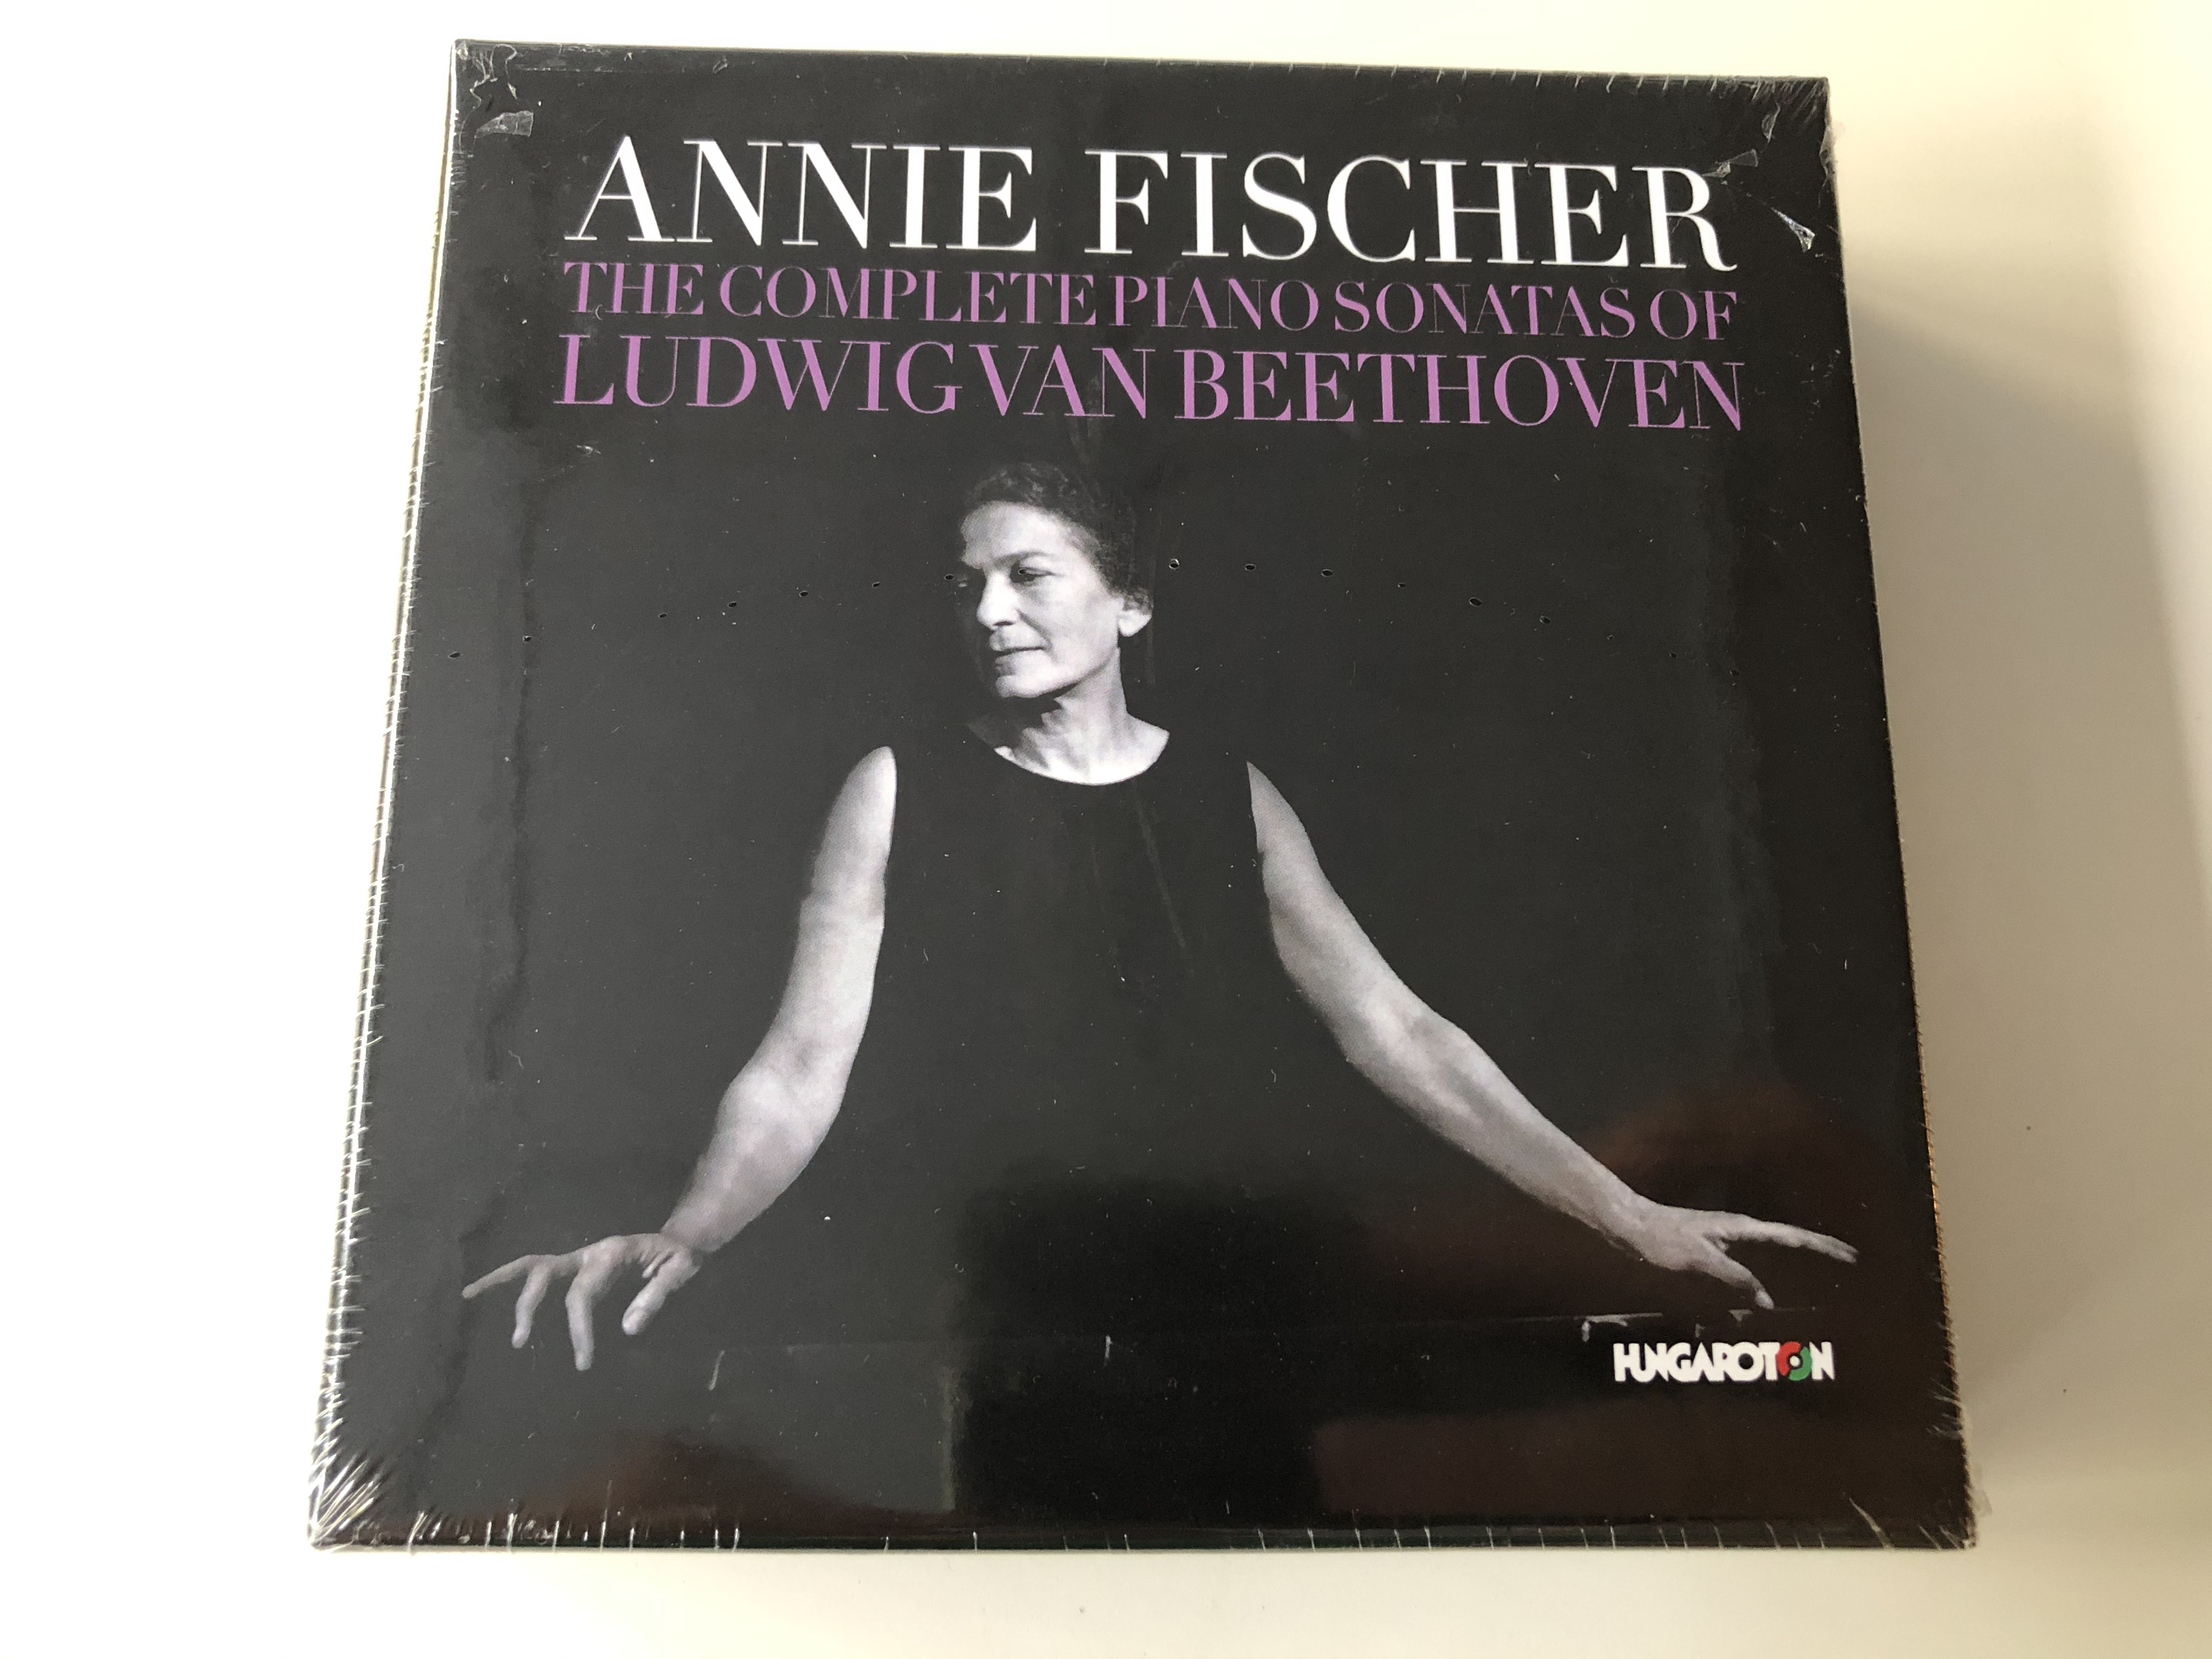 annie-fischer-the-complete-piano-sonatas-of-ludwig-van-beethoven-hungaroton-9x-audio-cd-2013-hcd41003-1-.jpg